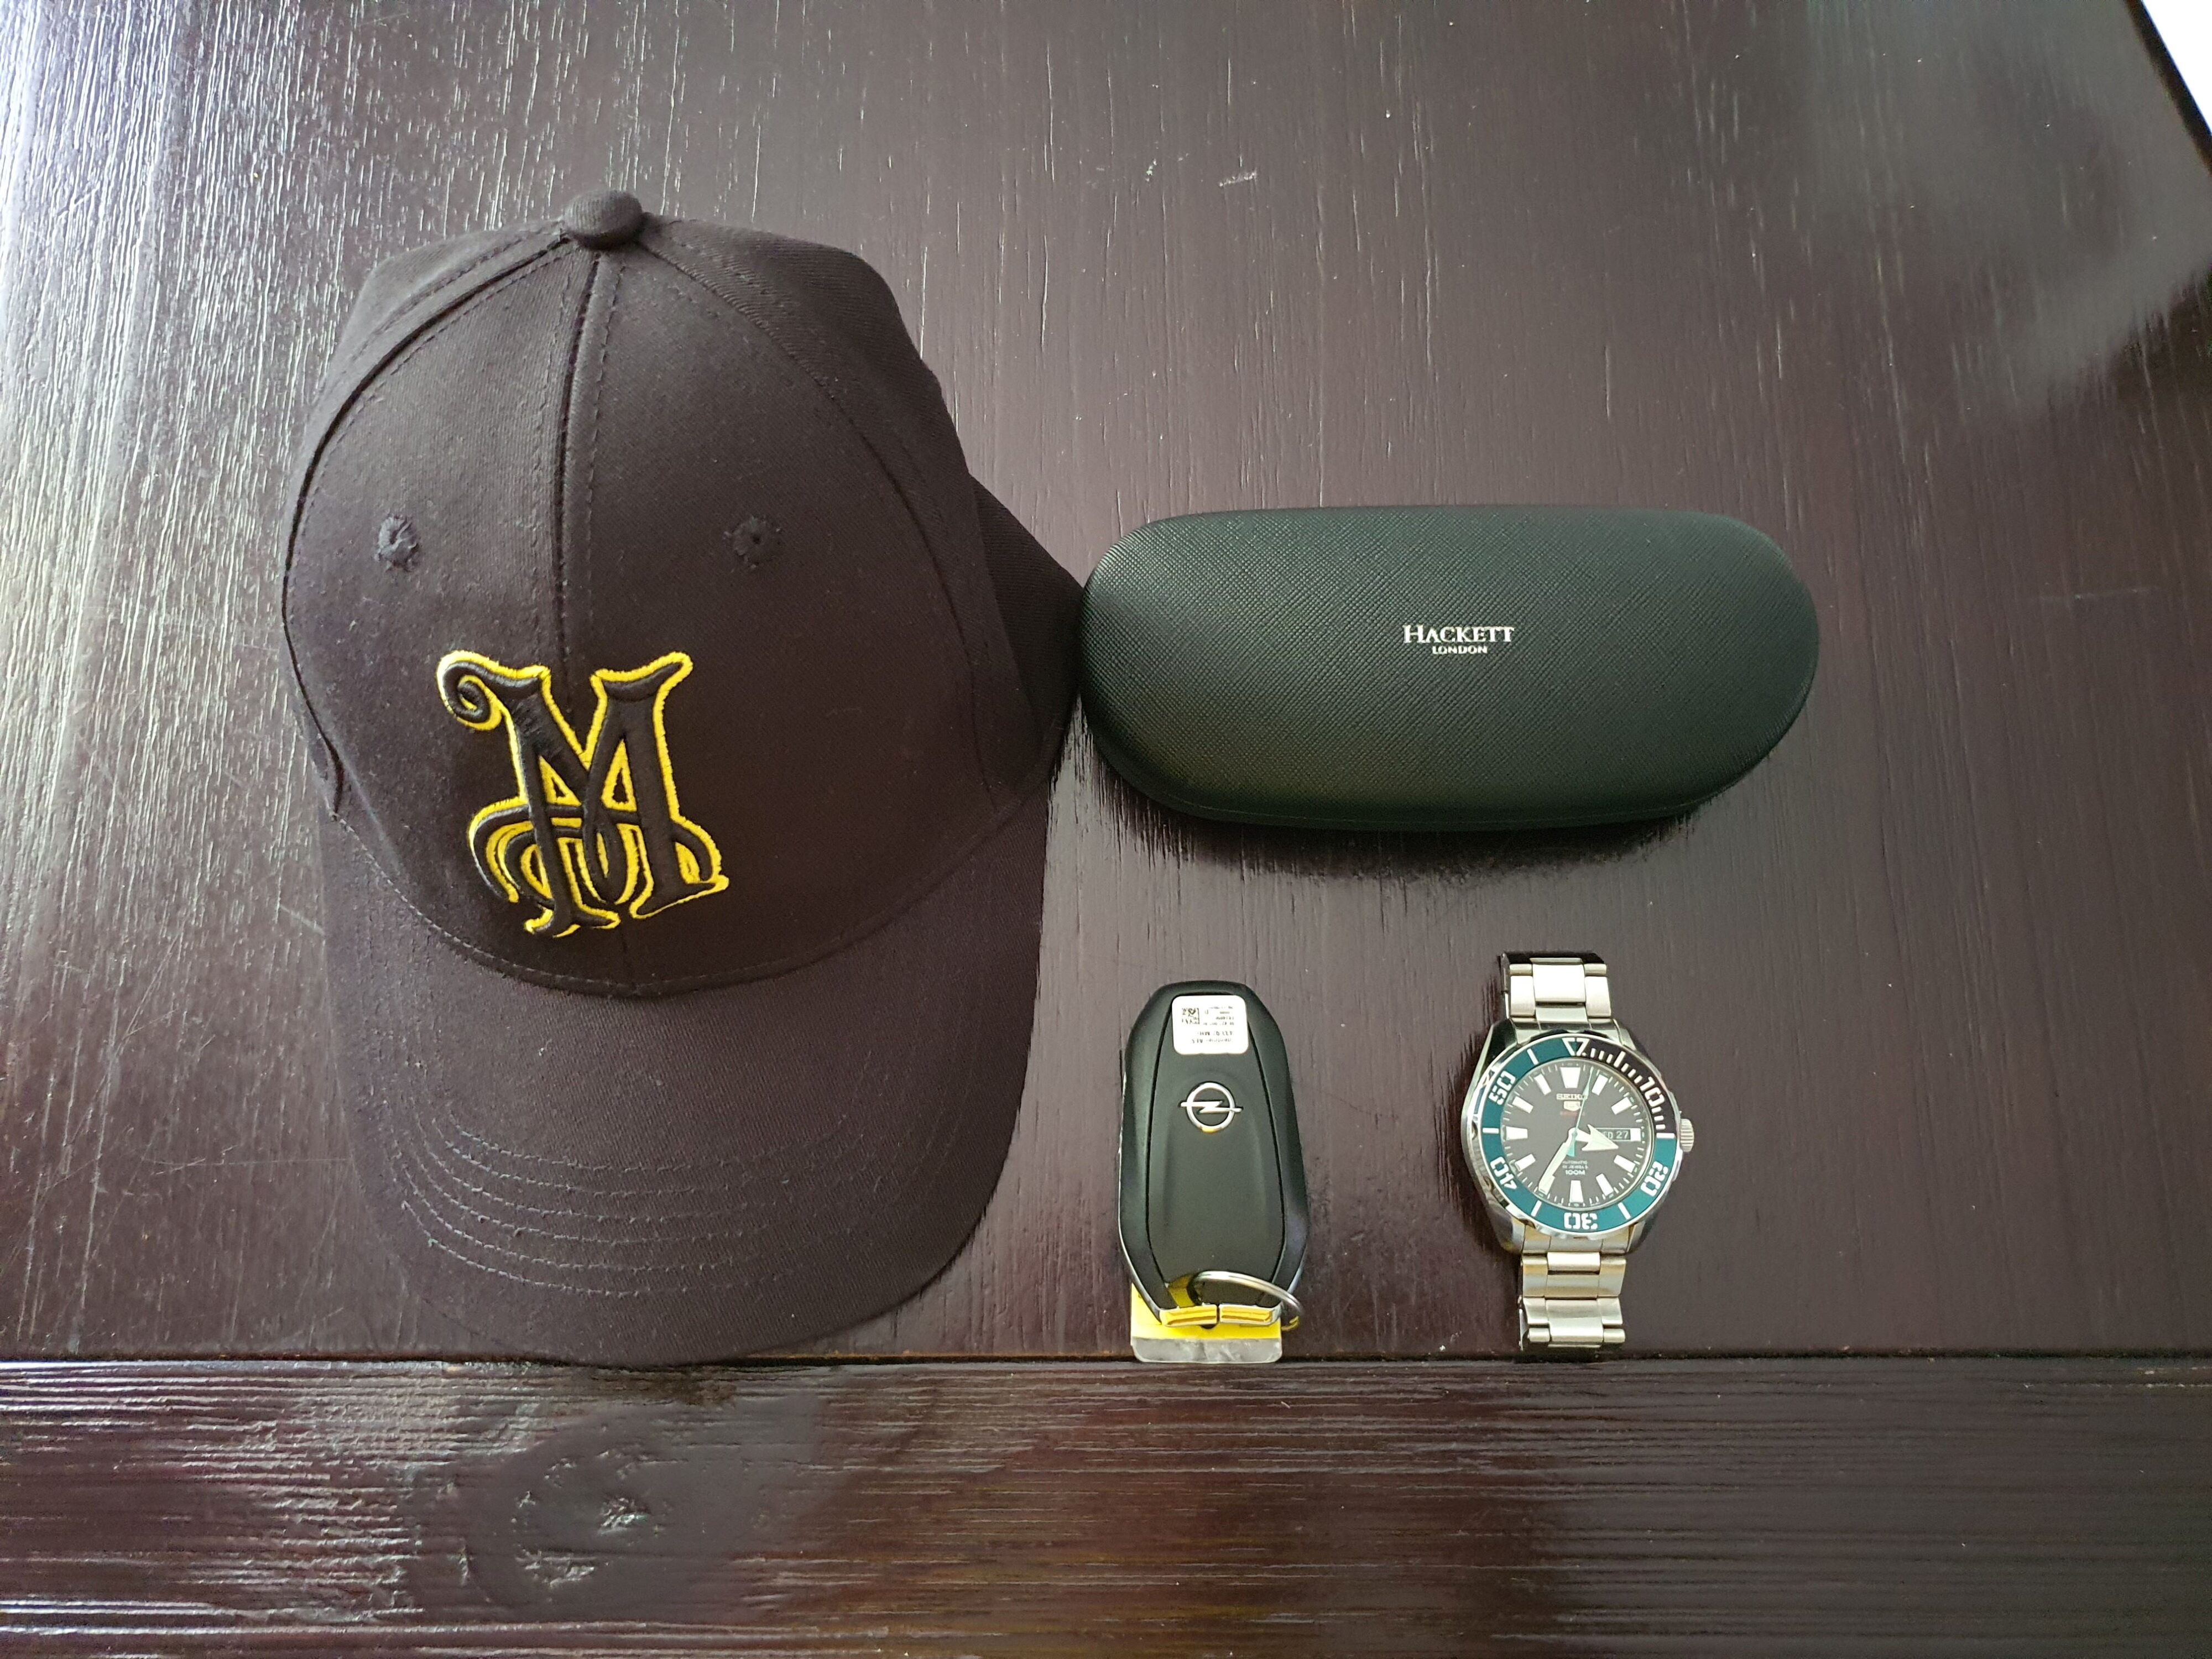 Matthew D'Souza's road trip essentials. Pictured is a black Meguiars cap, Hackett Harrow sunglasses, Opel car keys and a Seiko 5 Sports watch.